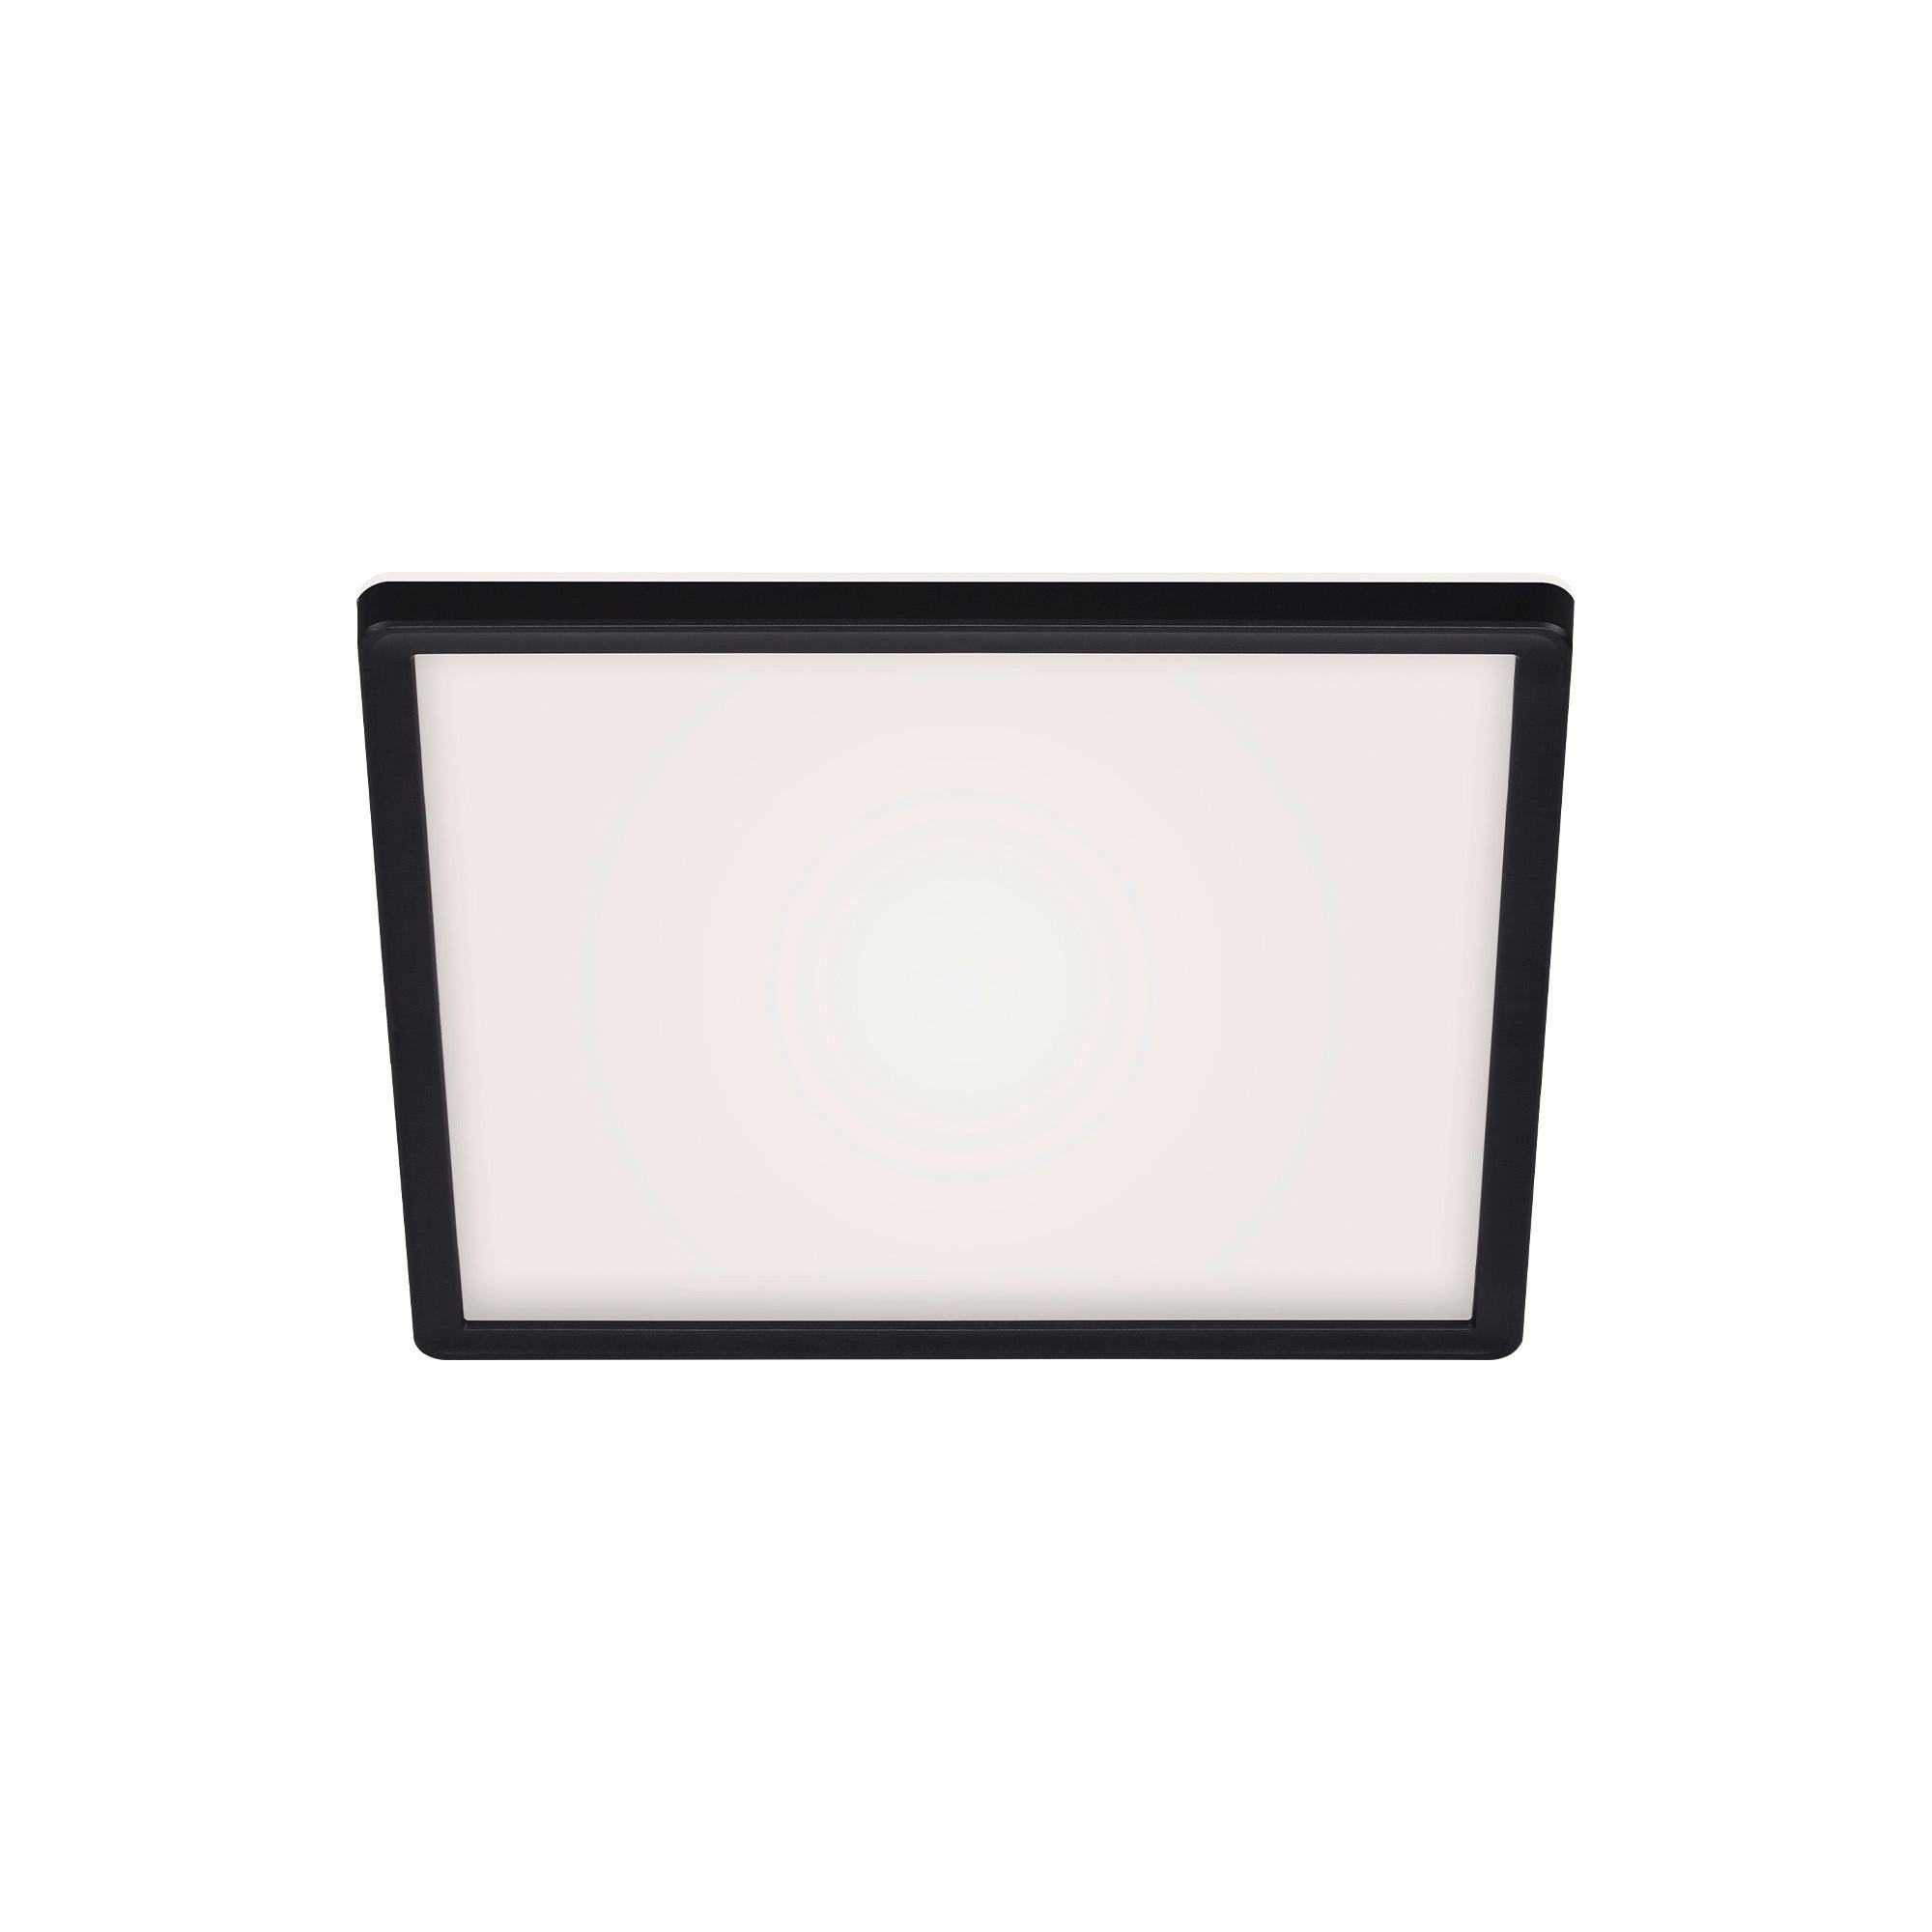 LED-PANEEL Slim  - Schwarz, Basics, Kunststoff (42/42/2,9cm)